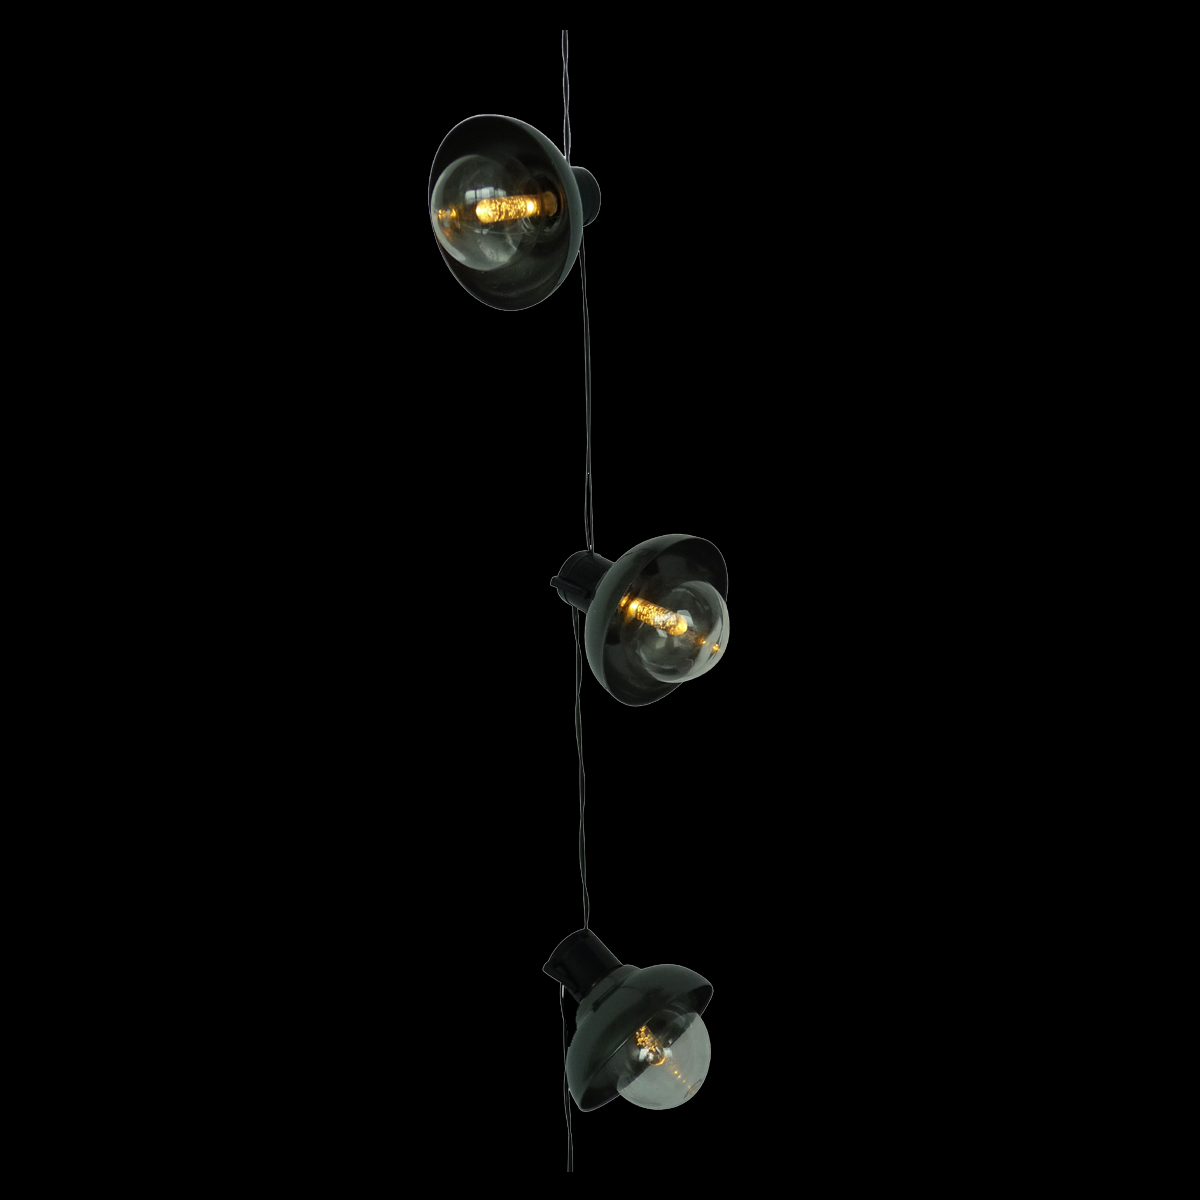 Lichterkette 10 Led Birnen Lampenschirm - Design aussen Lichterkette Glühlampen mit Schirm, Batterie